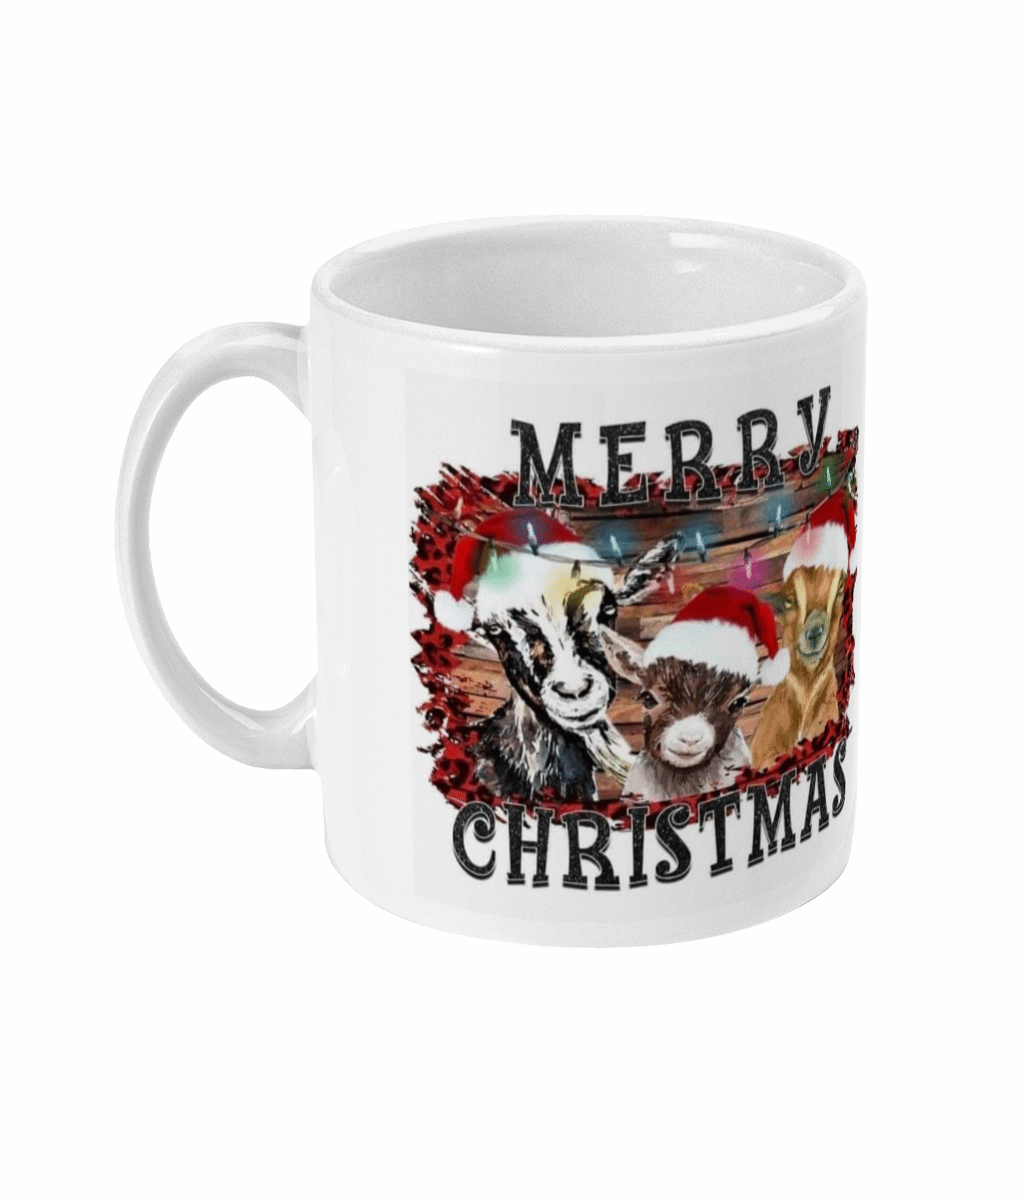  Goats Merry Christmas Mug by Free Spirit Accessories sold by Free Spirit Accessories